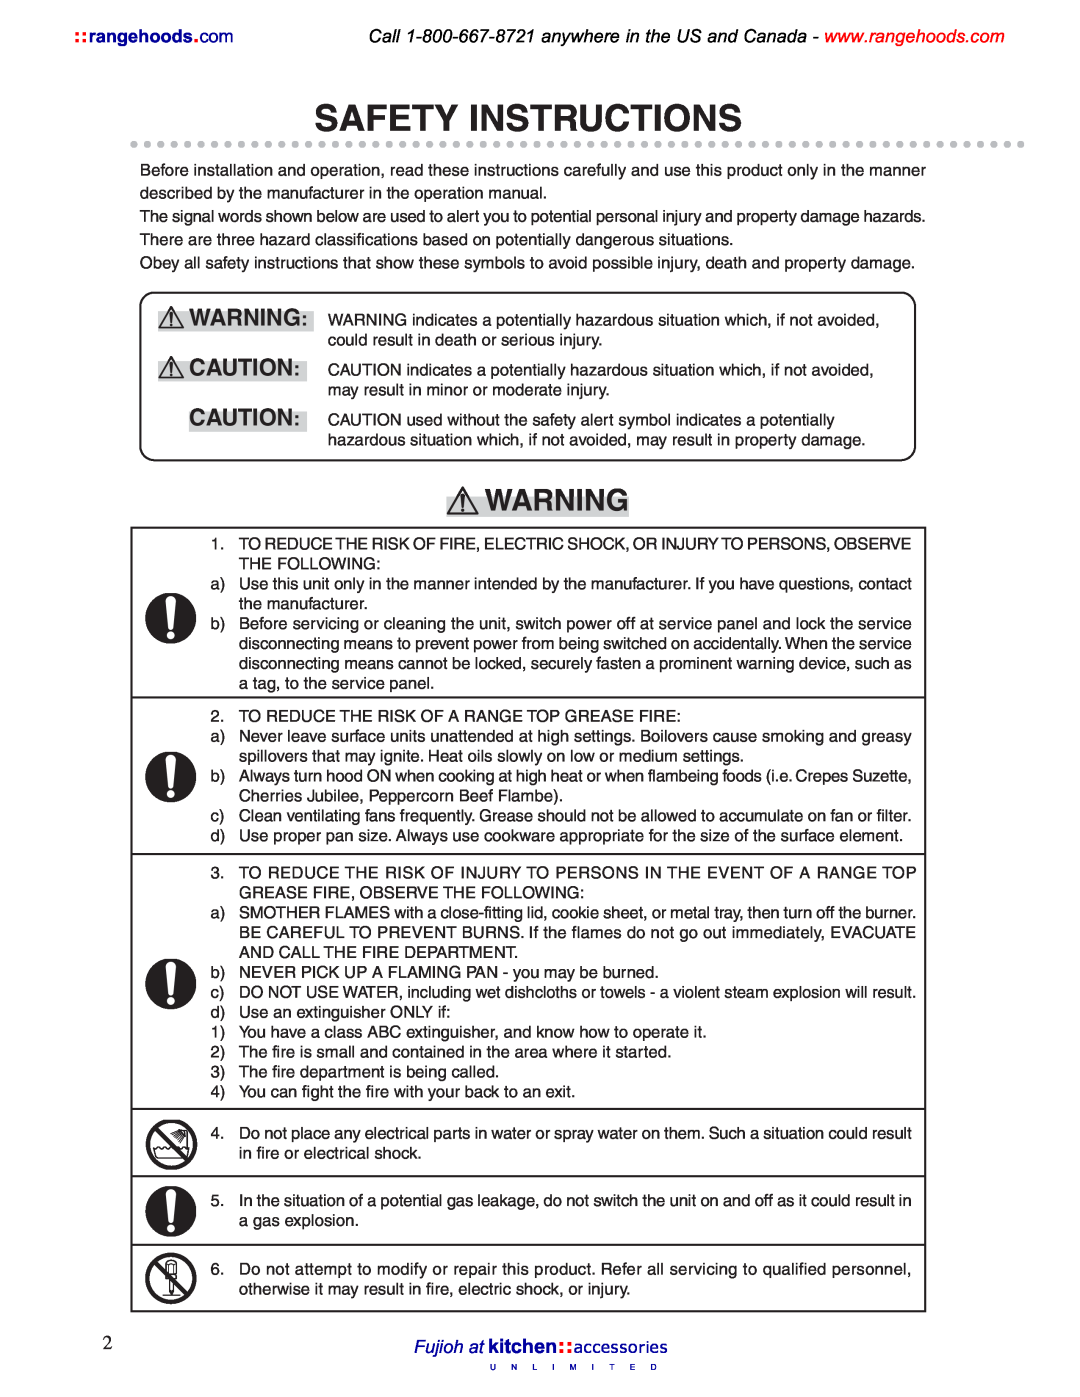 Fujioh BUF-011, 021 operation manual Safety Instructions, rangehoods.com 